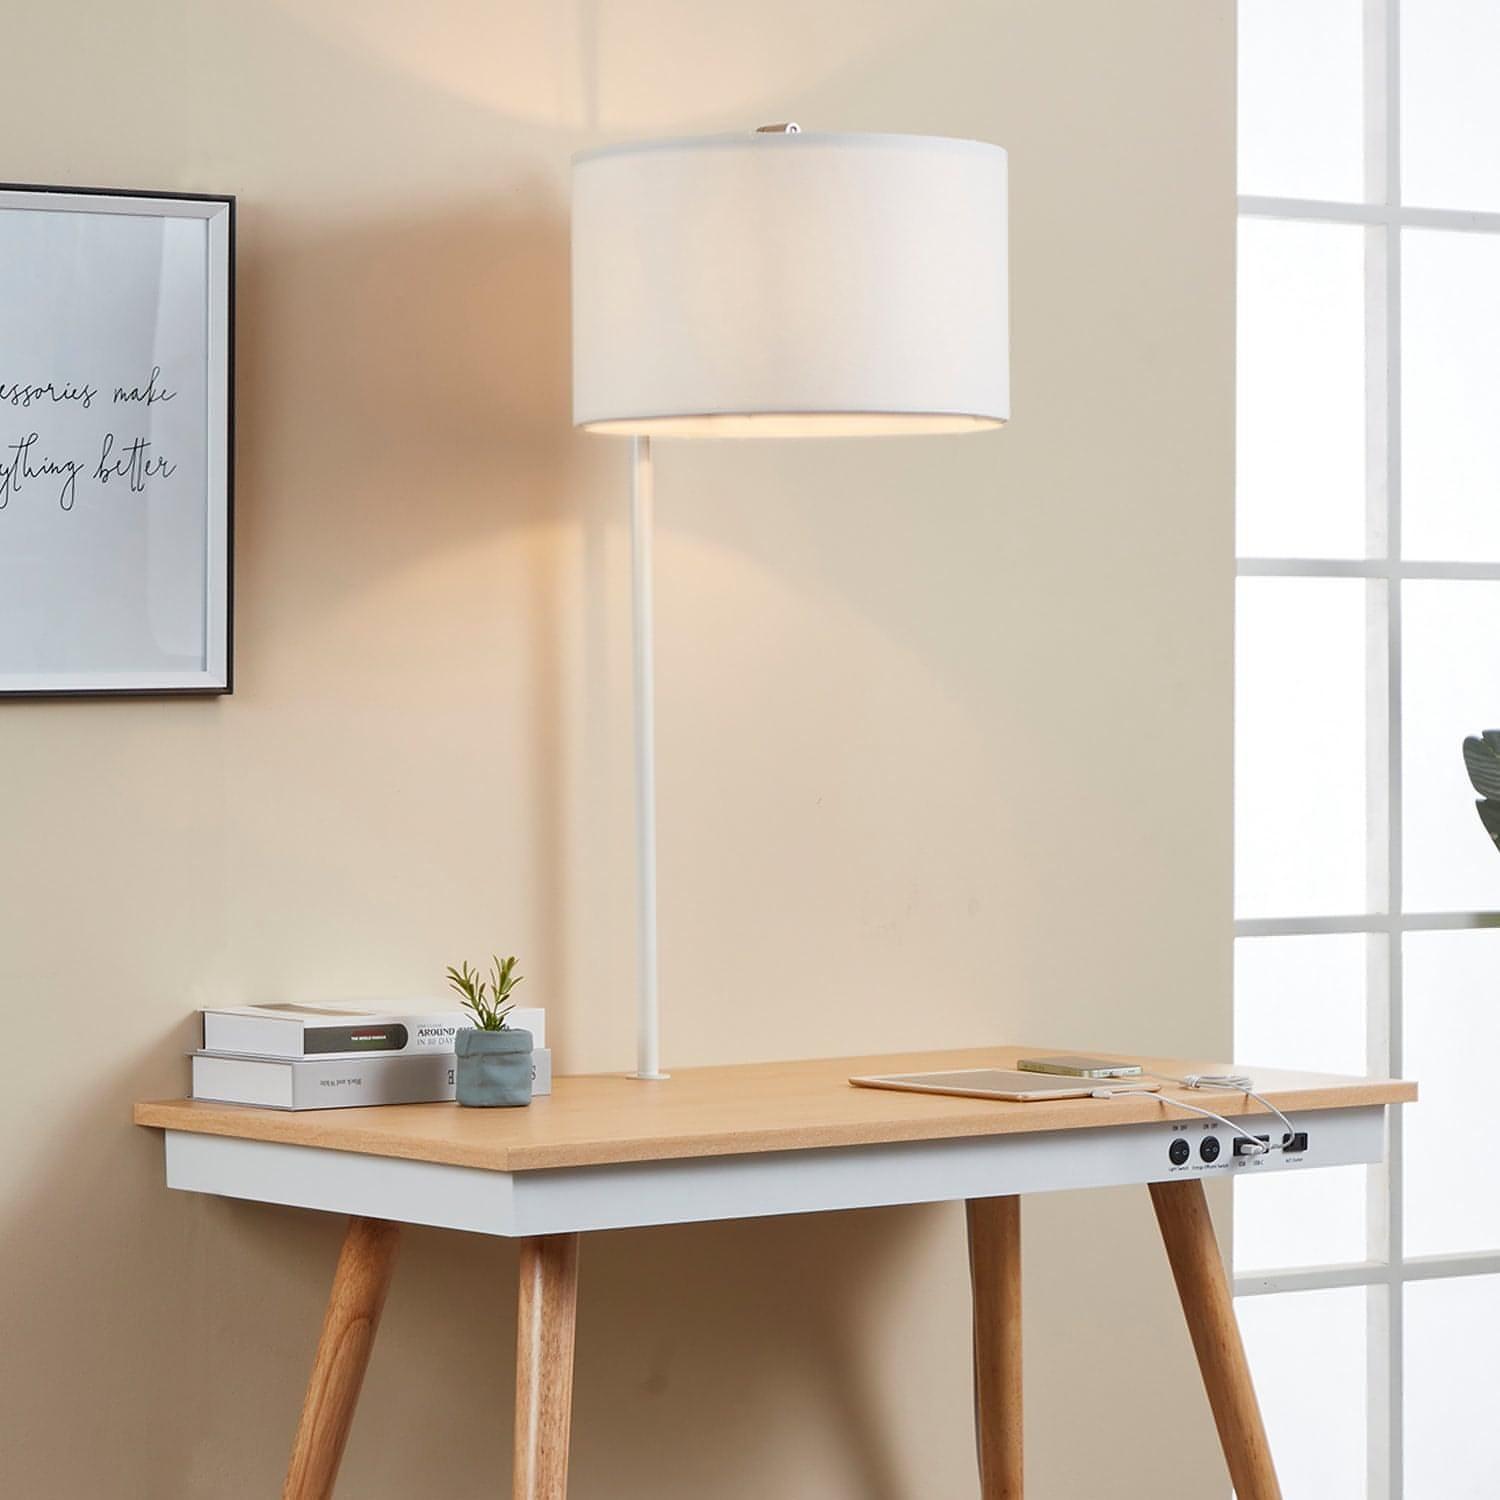 Ecworld Modern Design Workstation Desk with Hidden Cord Management Panels - Pine